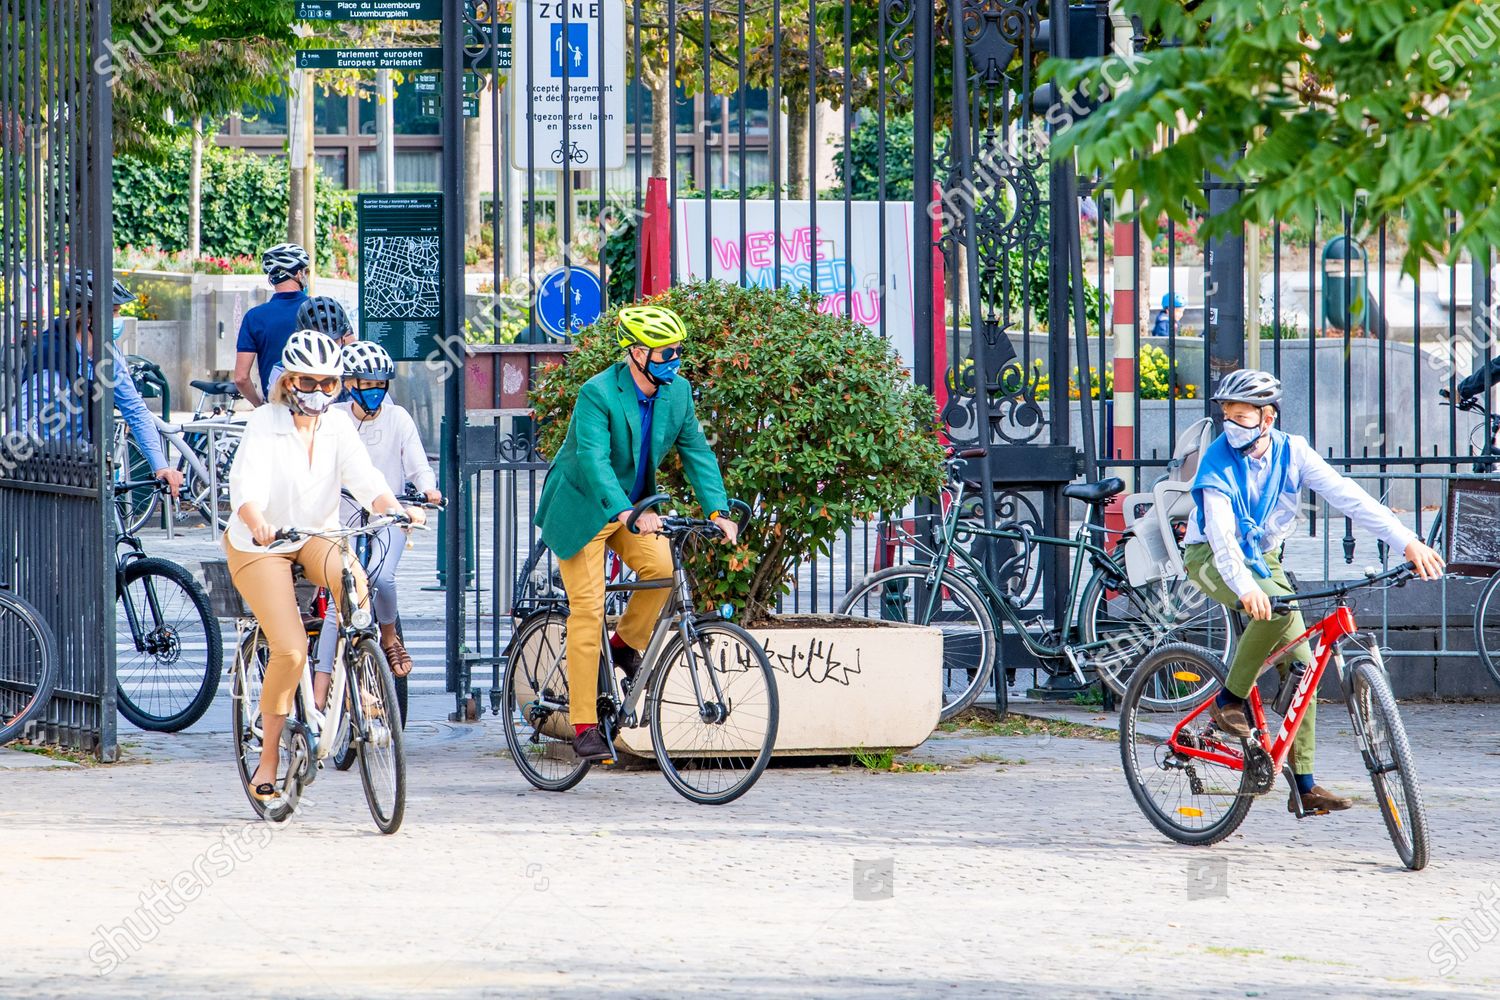 belgian-royals-cycle-on-car-free-sunday-brussels-belgium-shutterstock-editorial-10783150l.jpg